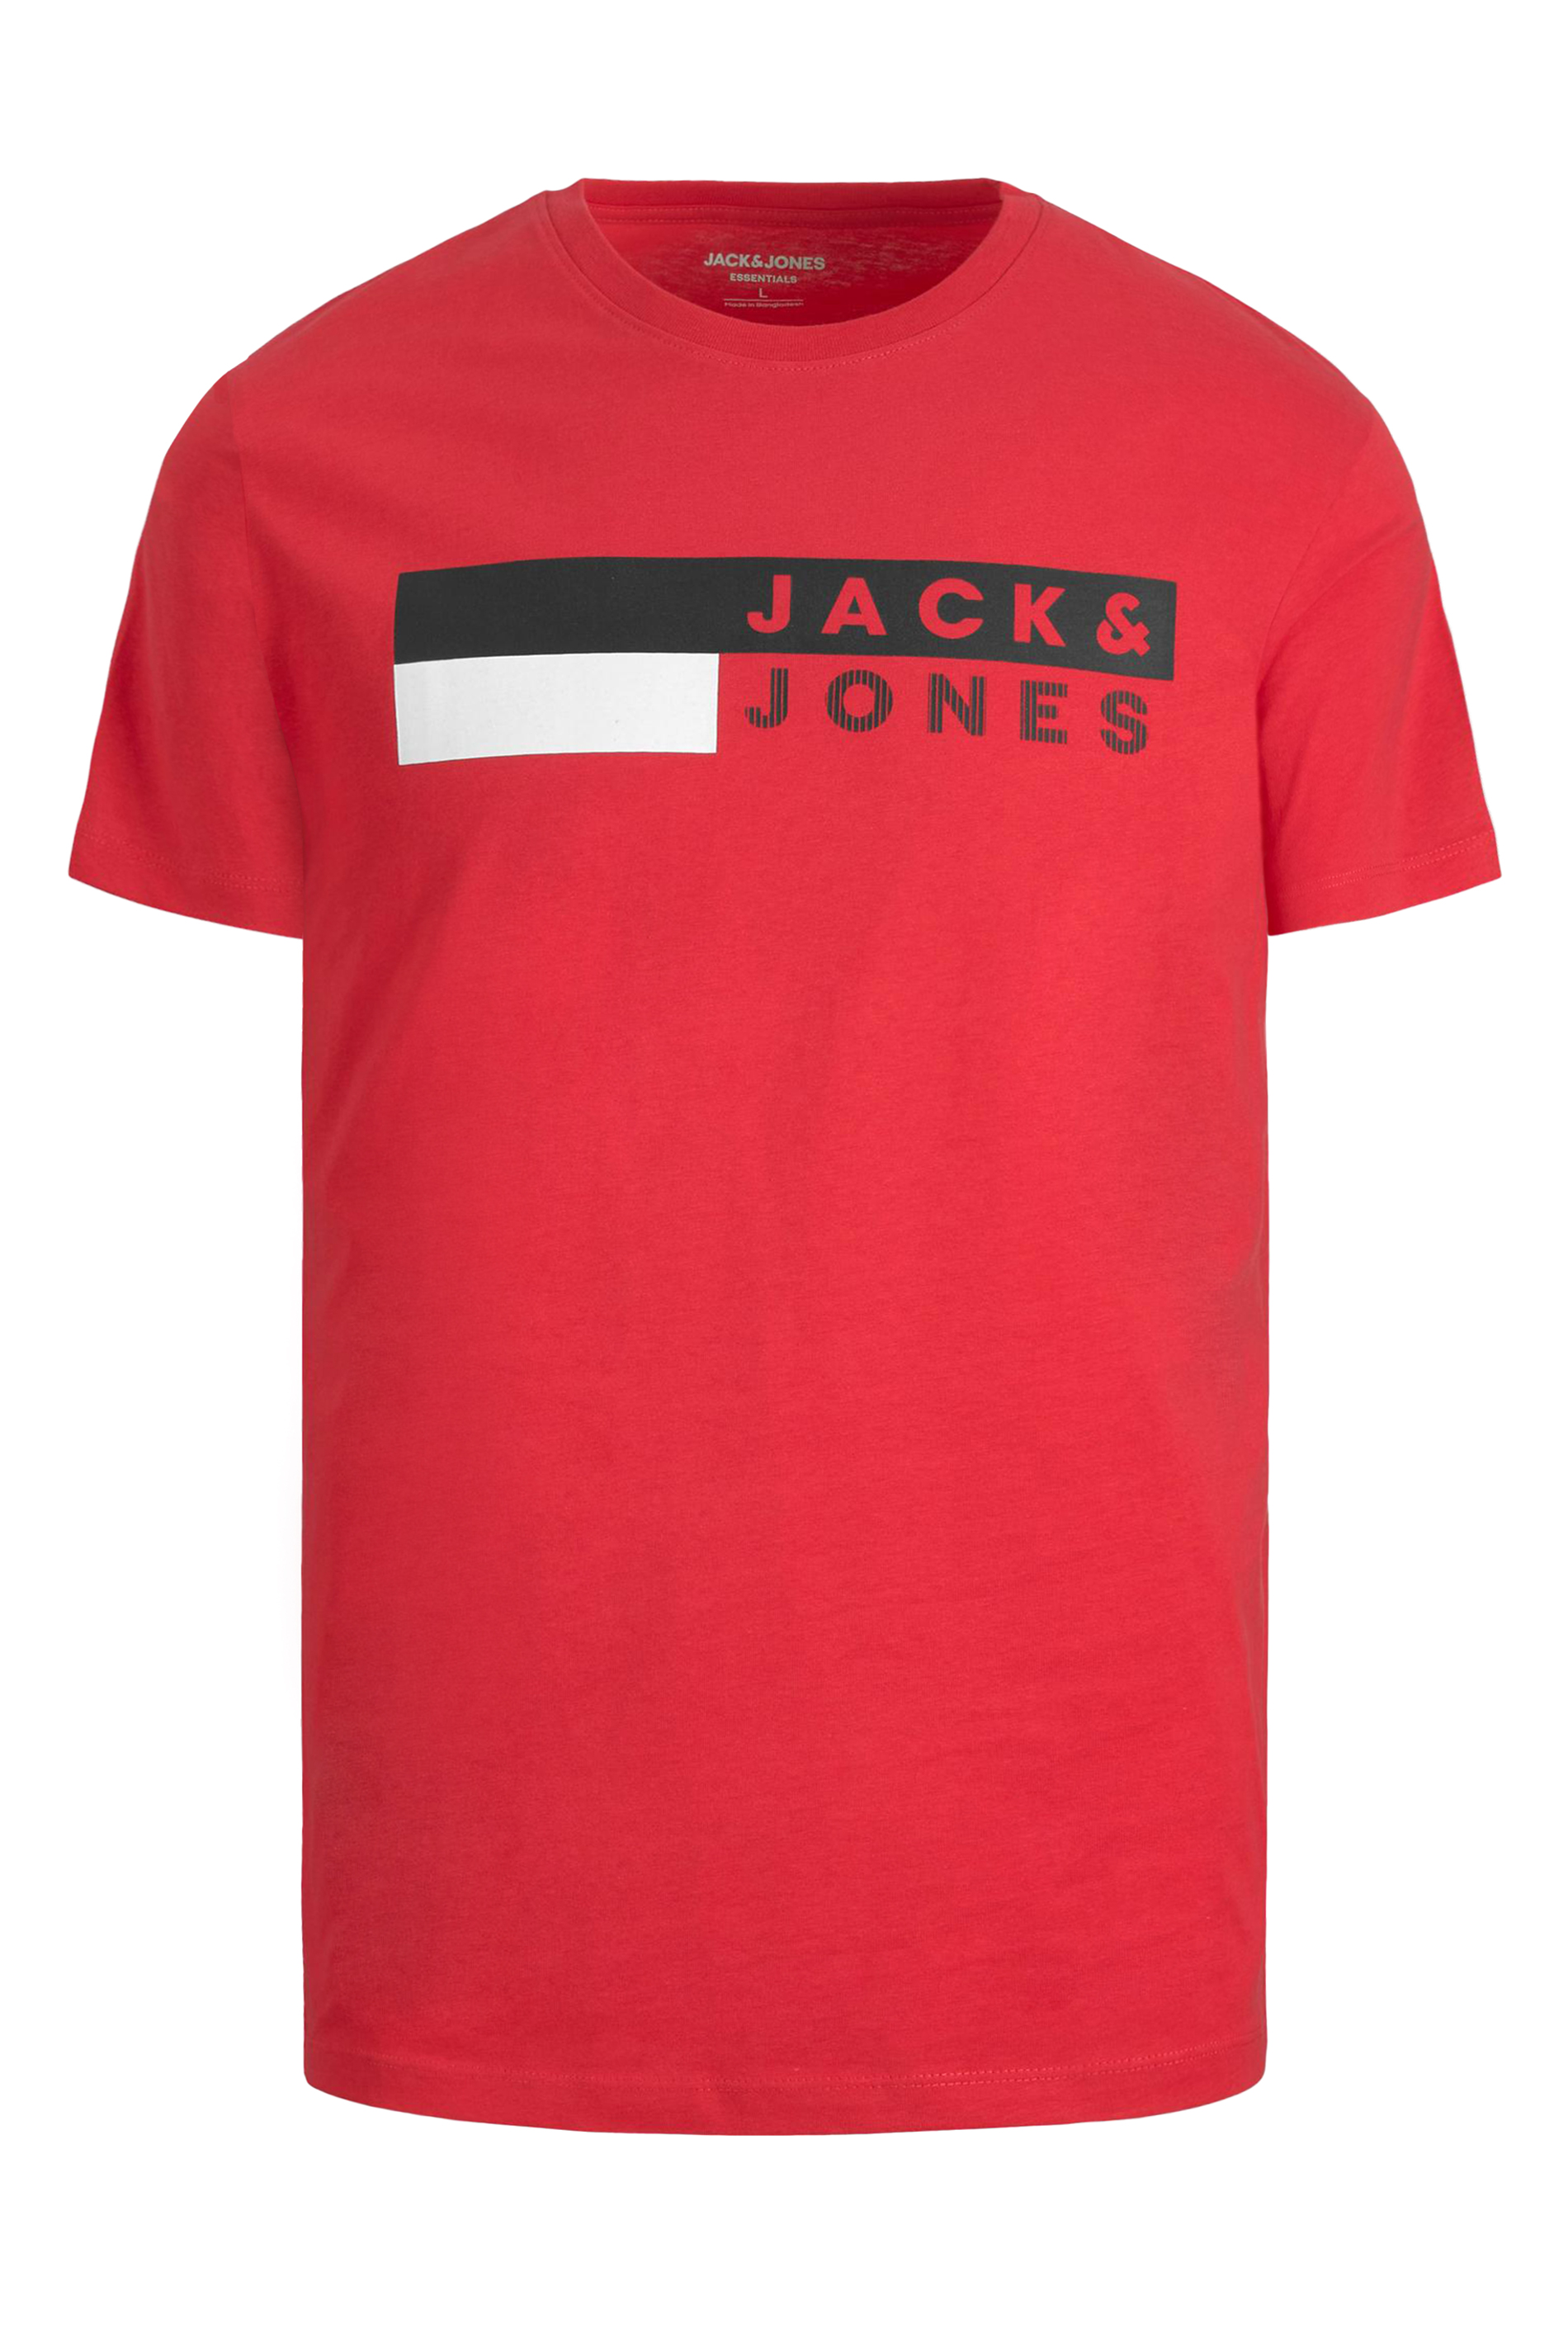 JACK & JONES Big & Tall Red & Black Logo Print Short Sleeve T-Shirt | BadRhino 2